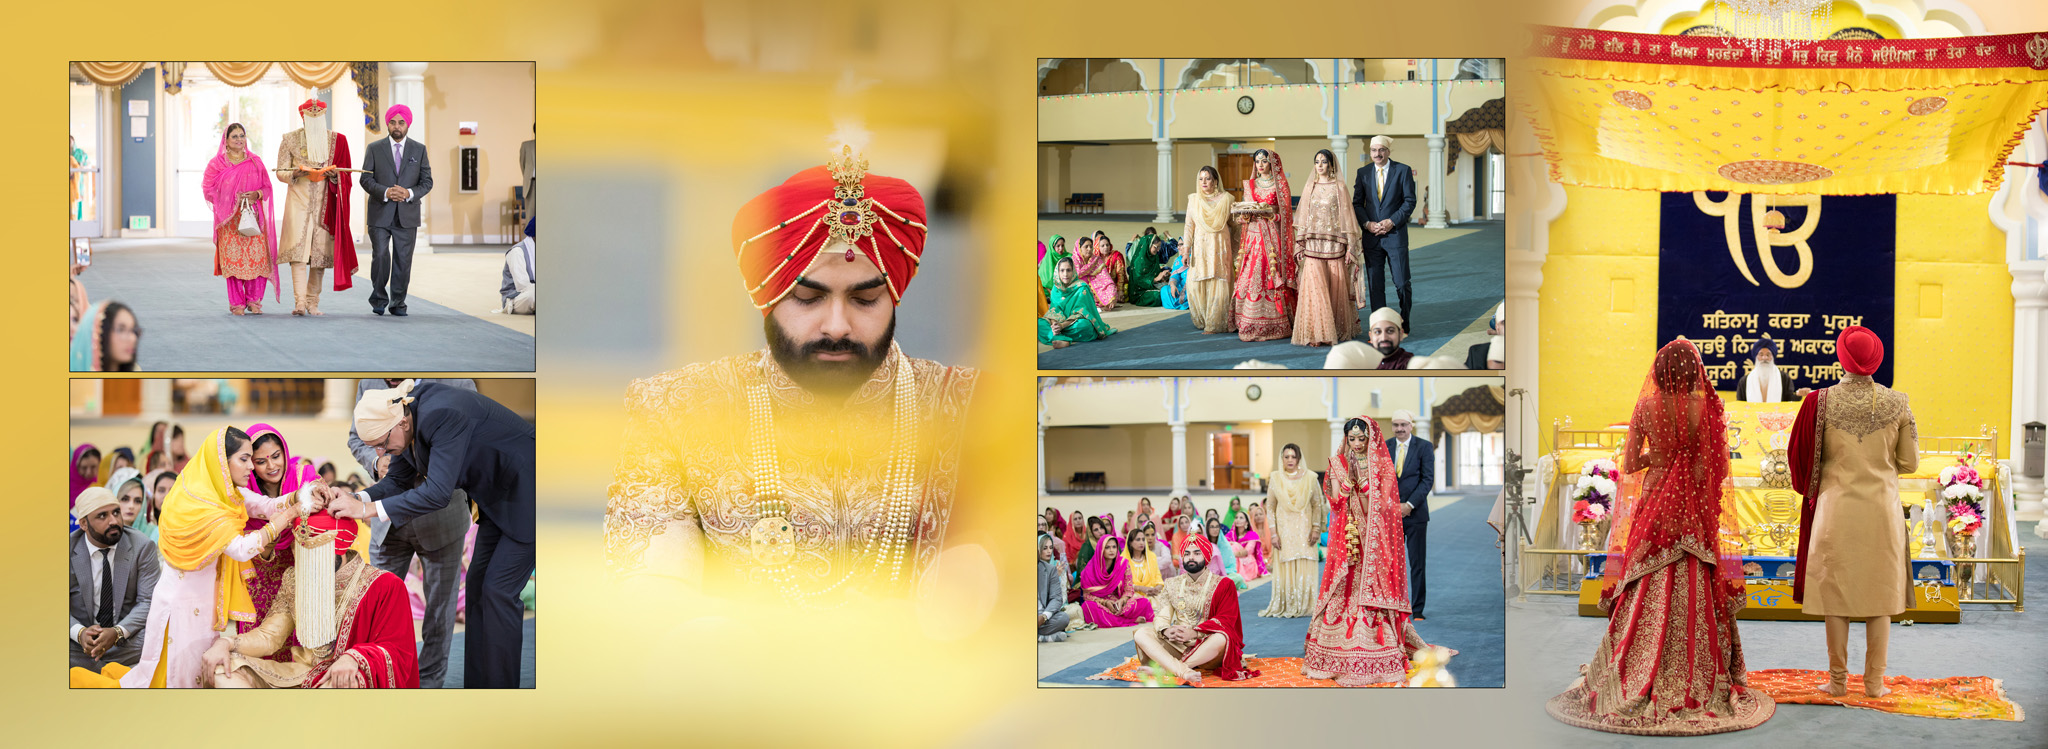 Indian wedding album design sikh ceremony